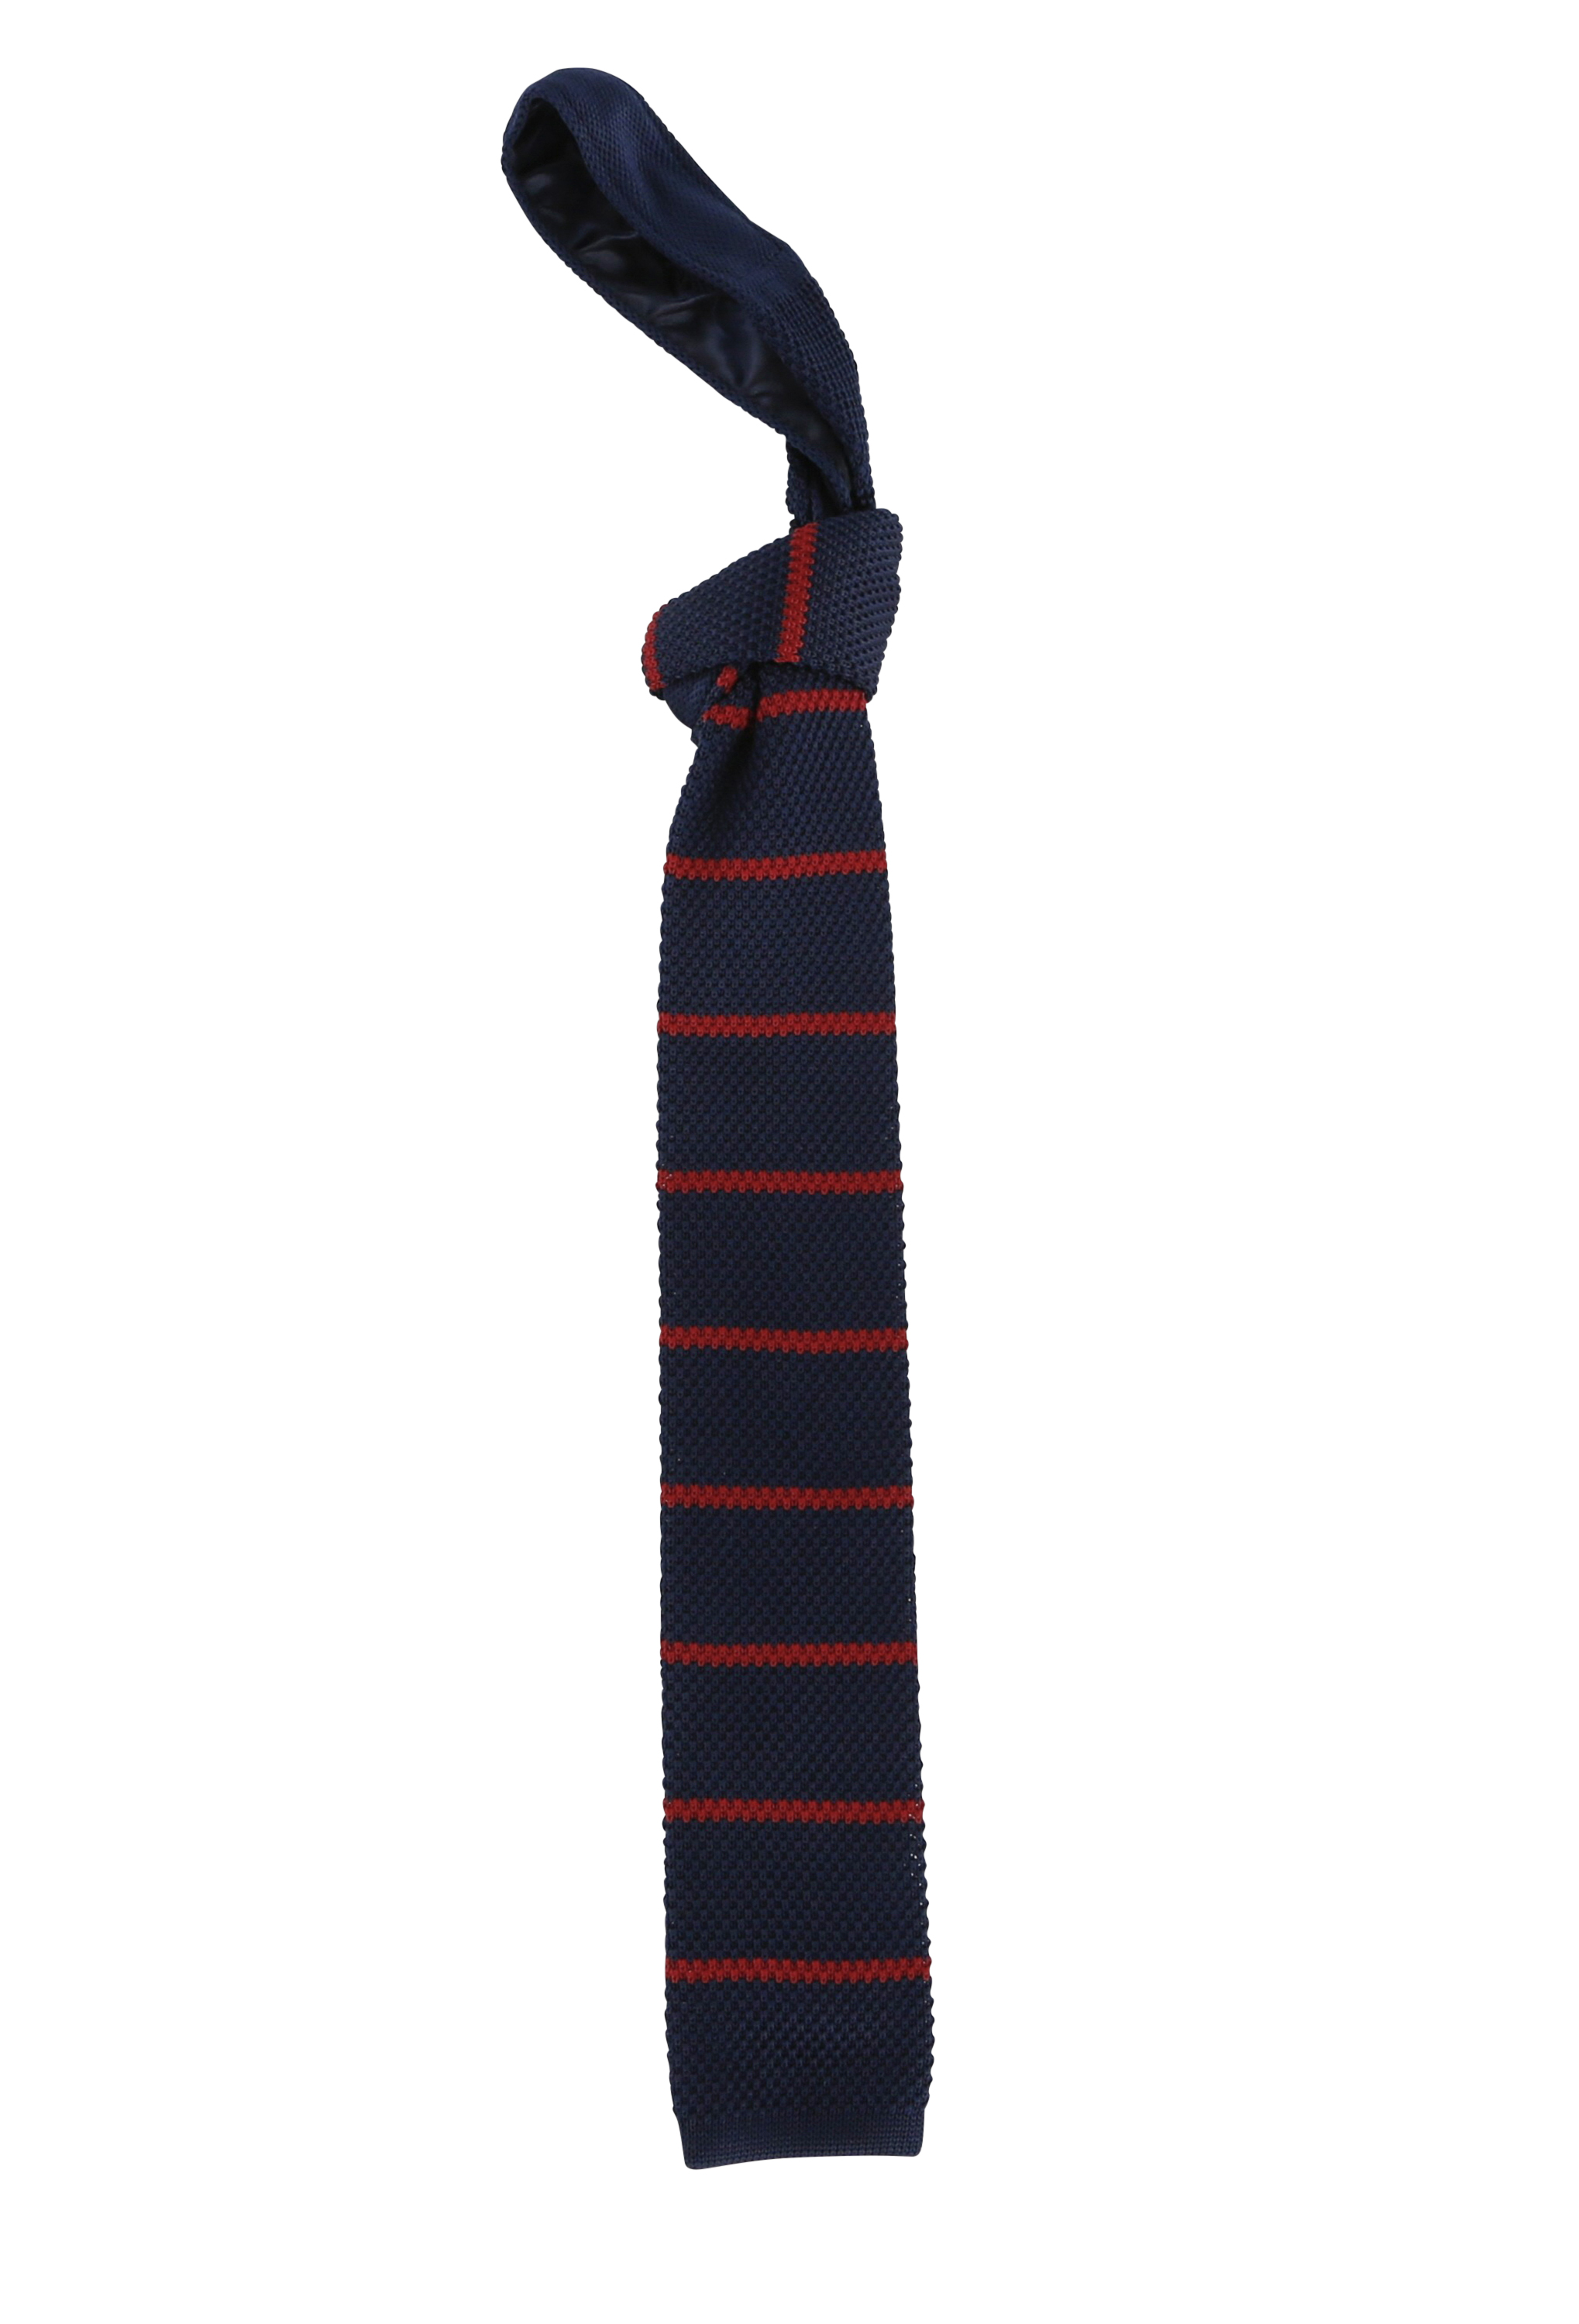 cravate maille rayures marine rouge